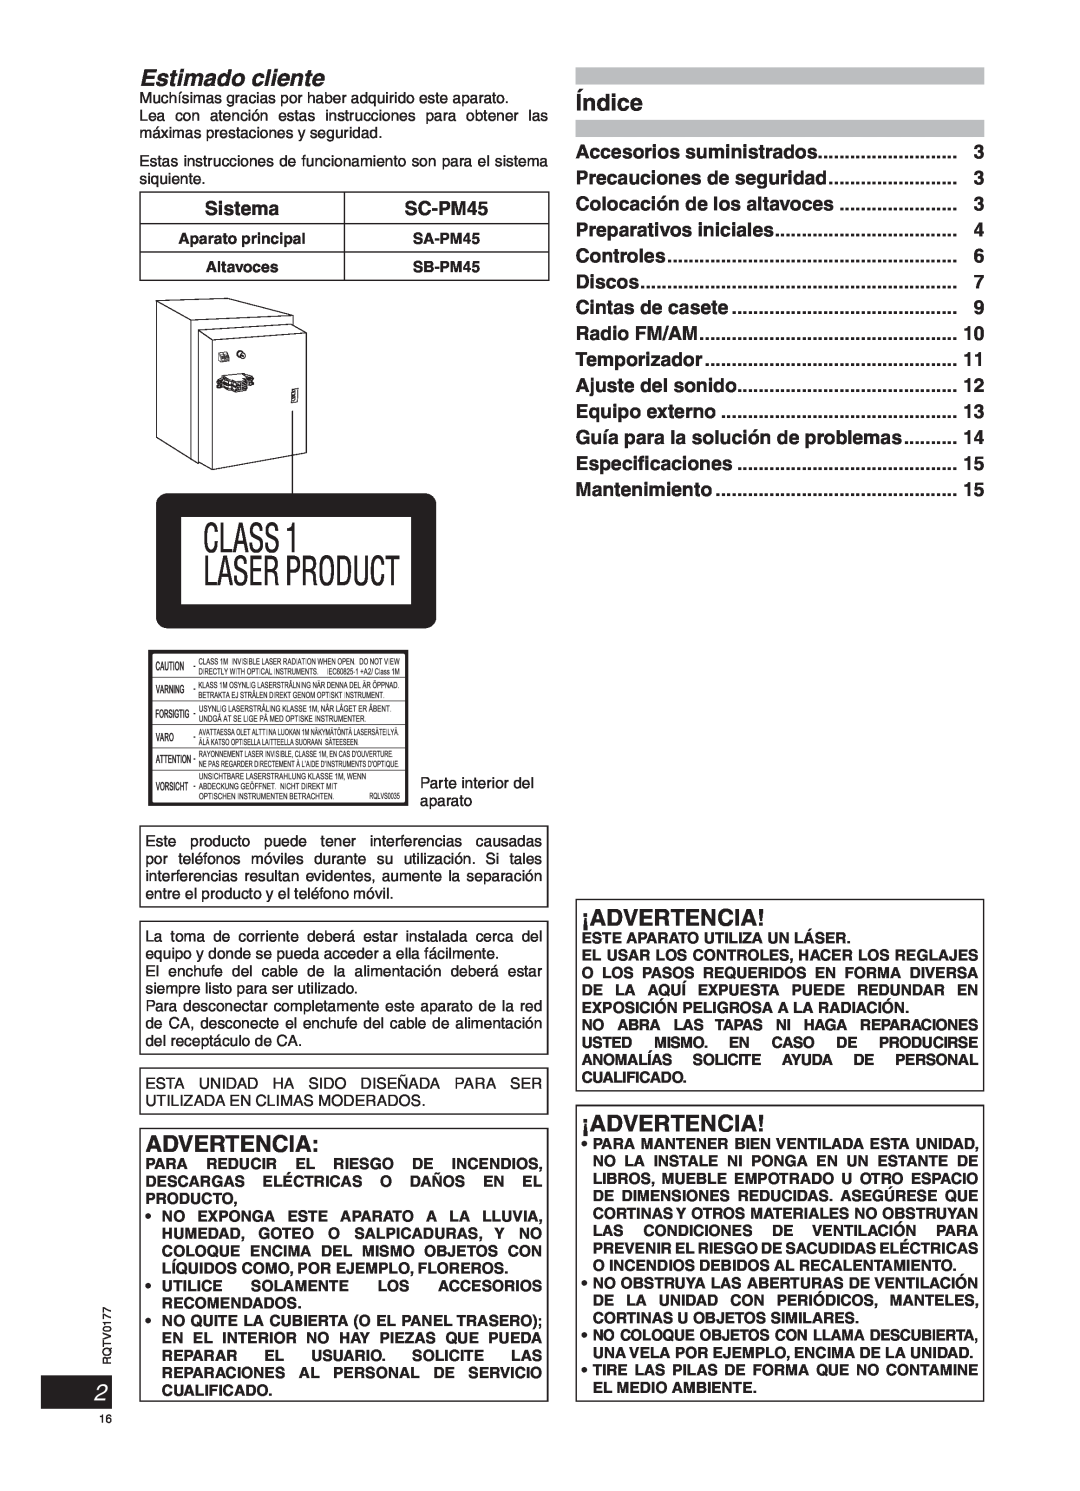 Panasonic SC-PM45 manual Estimado cliente, Índice, ¡Advertencia, Sistema, Accesorios suministrados 